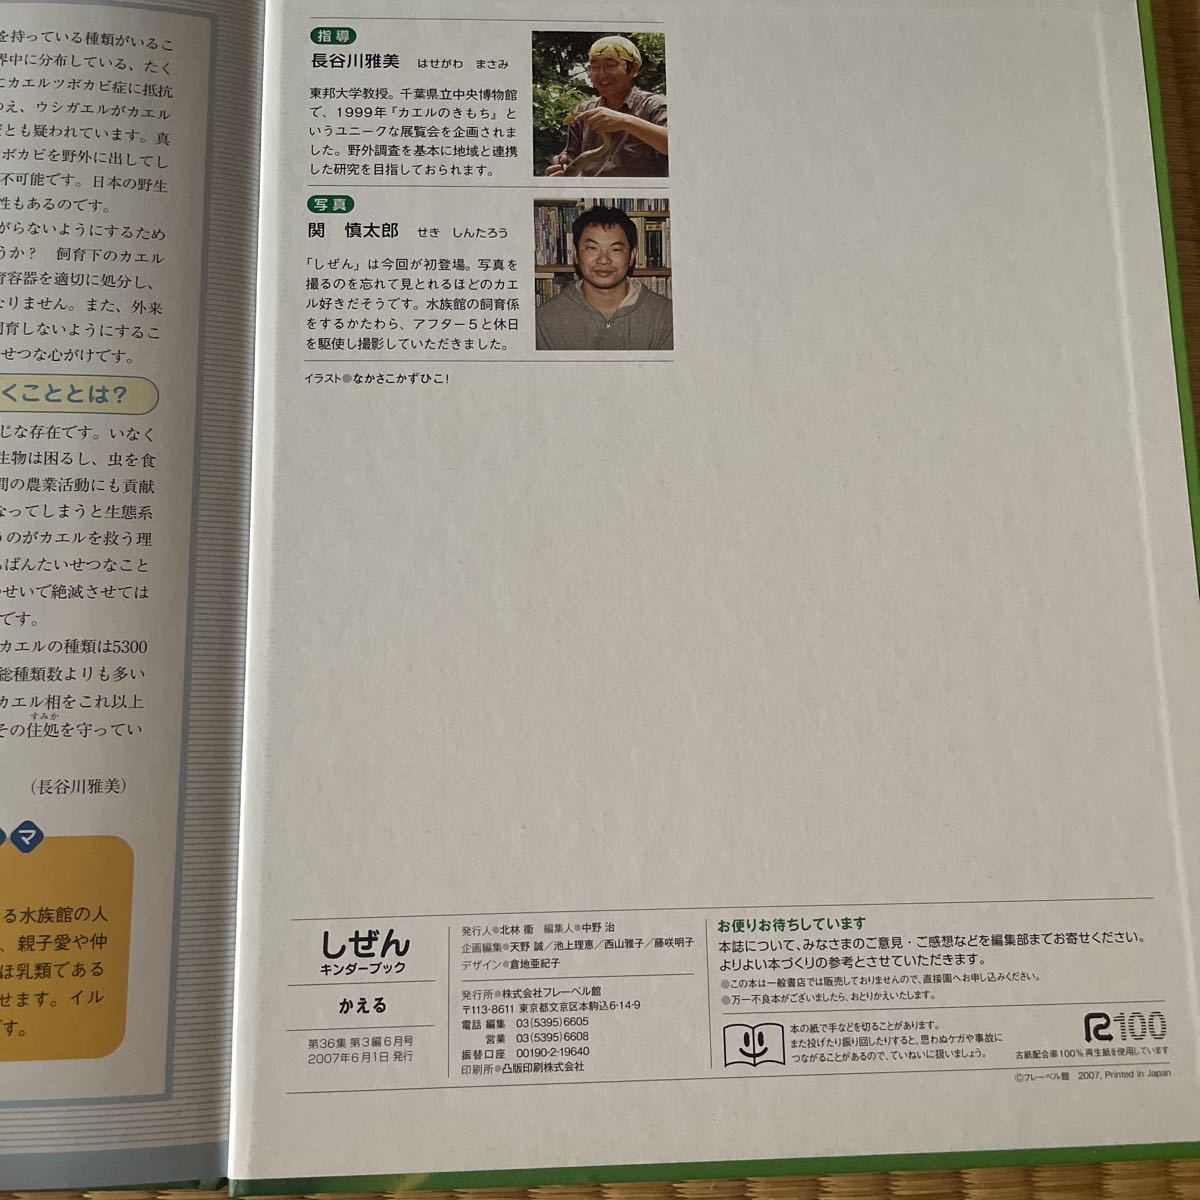 ki. gold da- книжка ......amaga L, Hasegawa Масами .. Taro f этикетка павильон 400